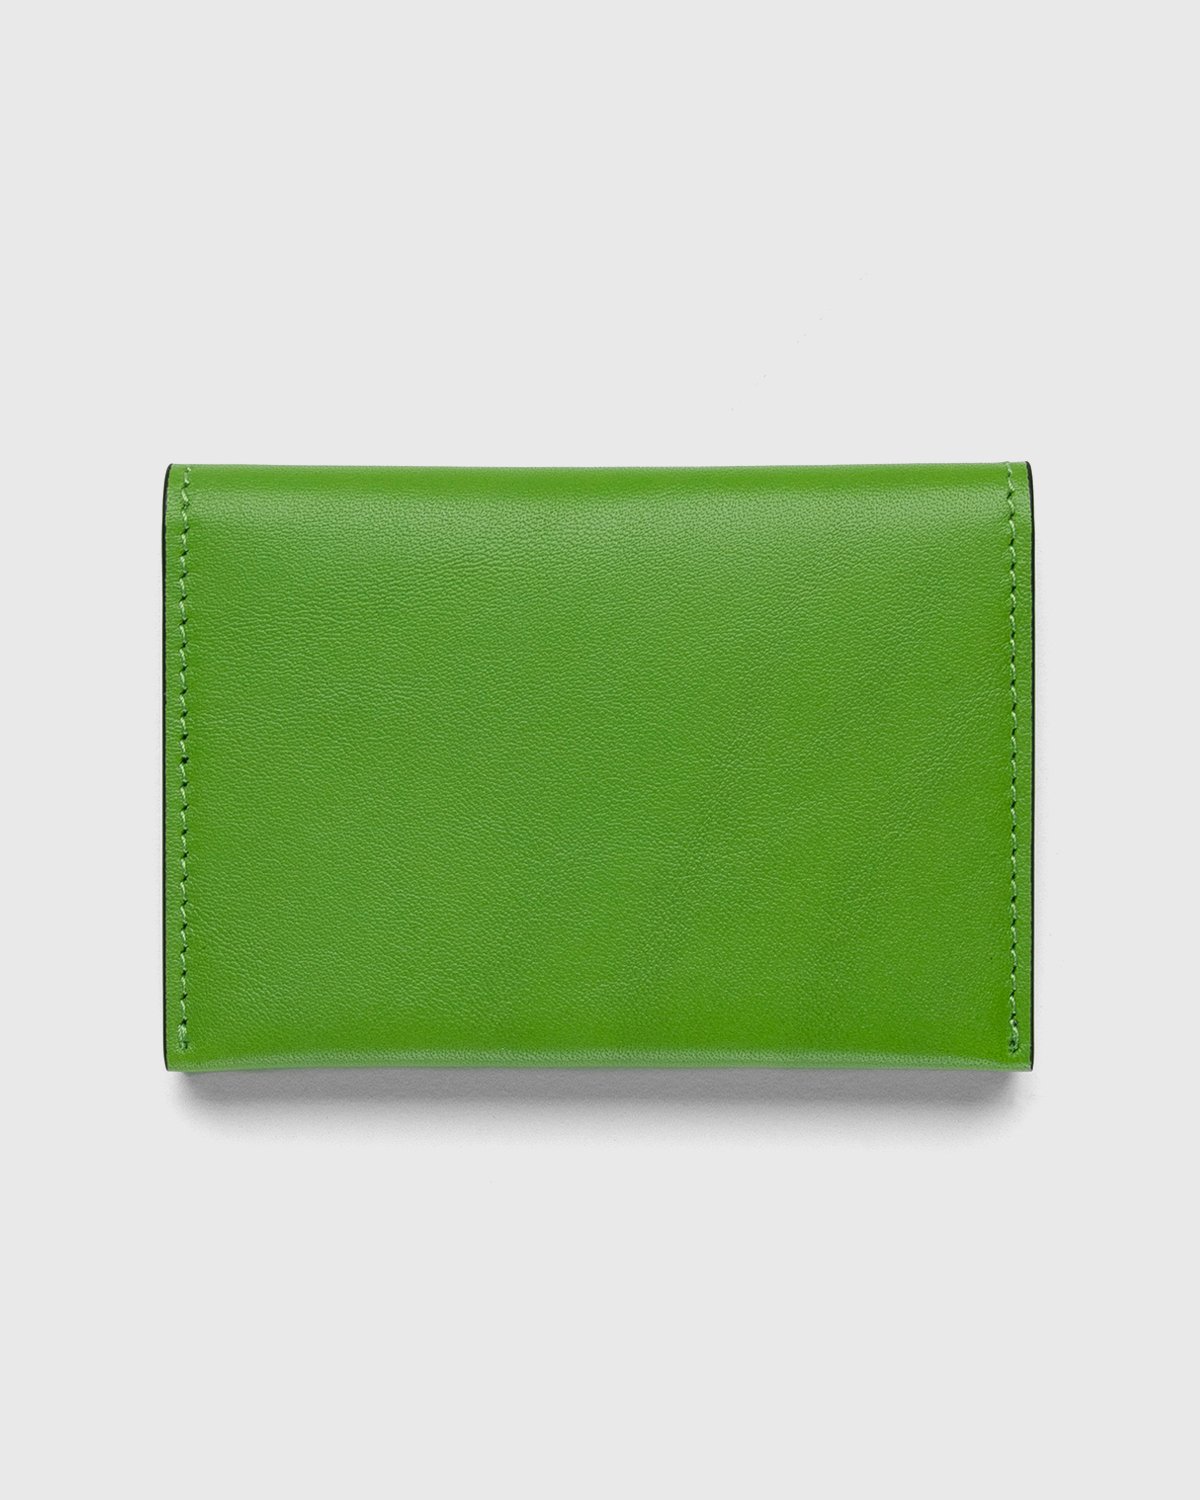 Acne Studios - Leather Card Case Multi Green - Accessories - Green - Image 2